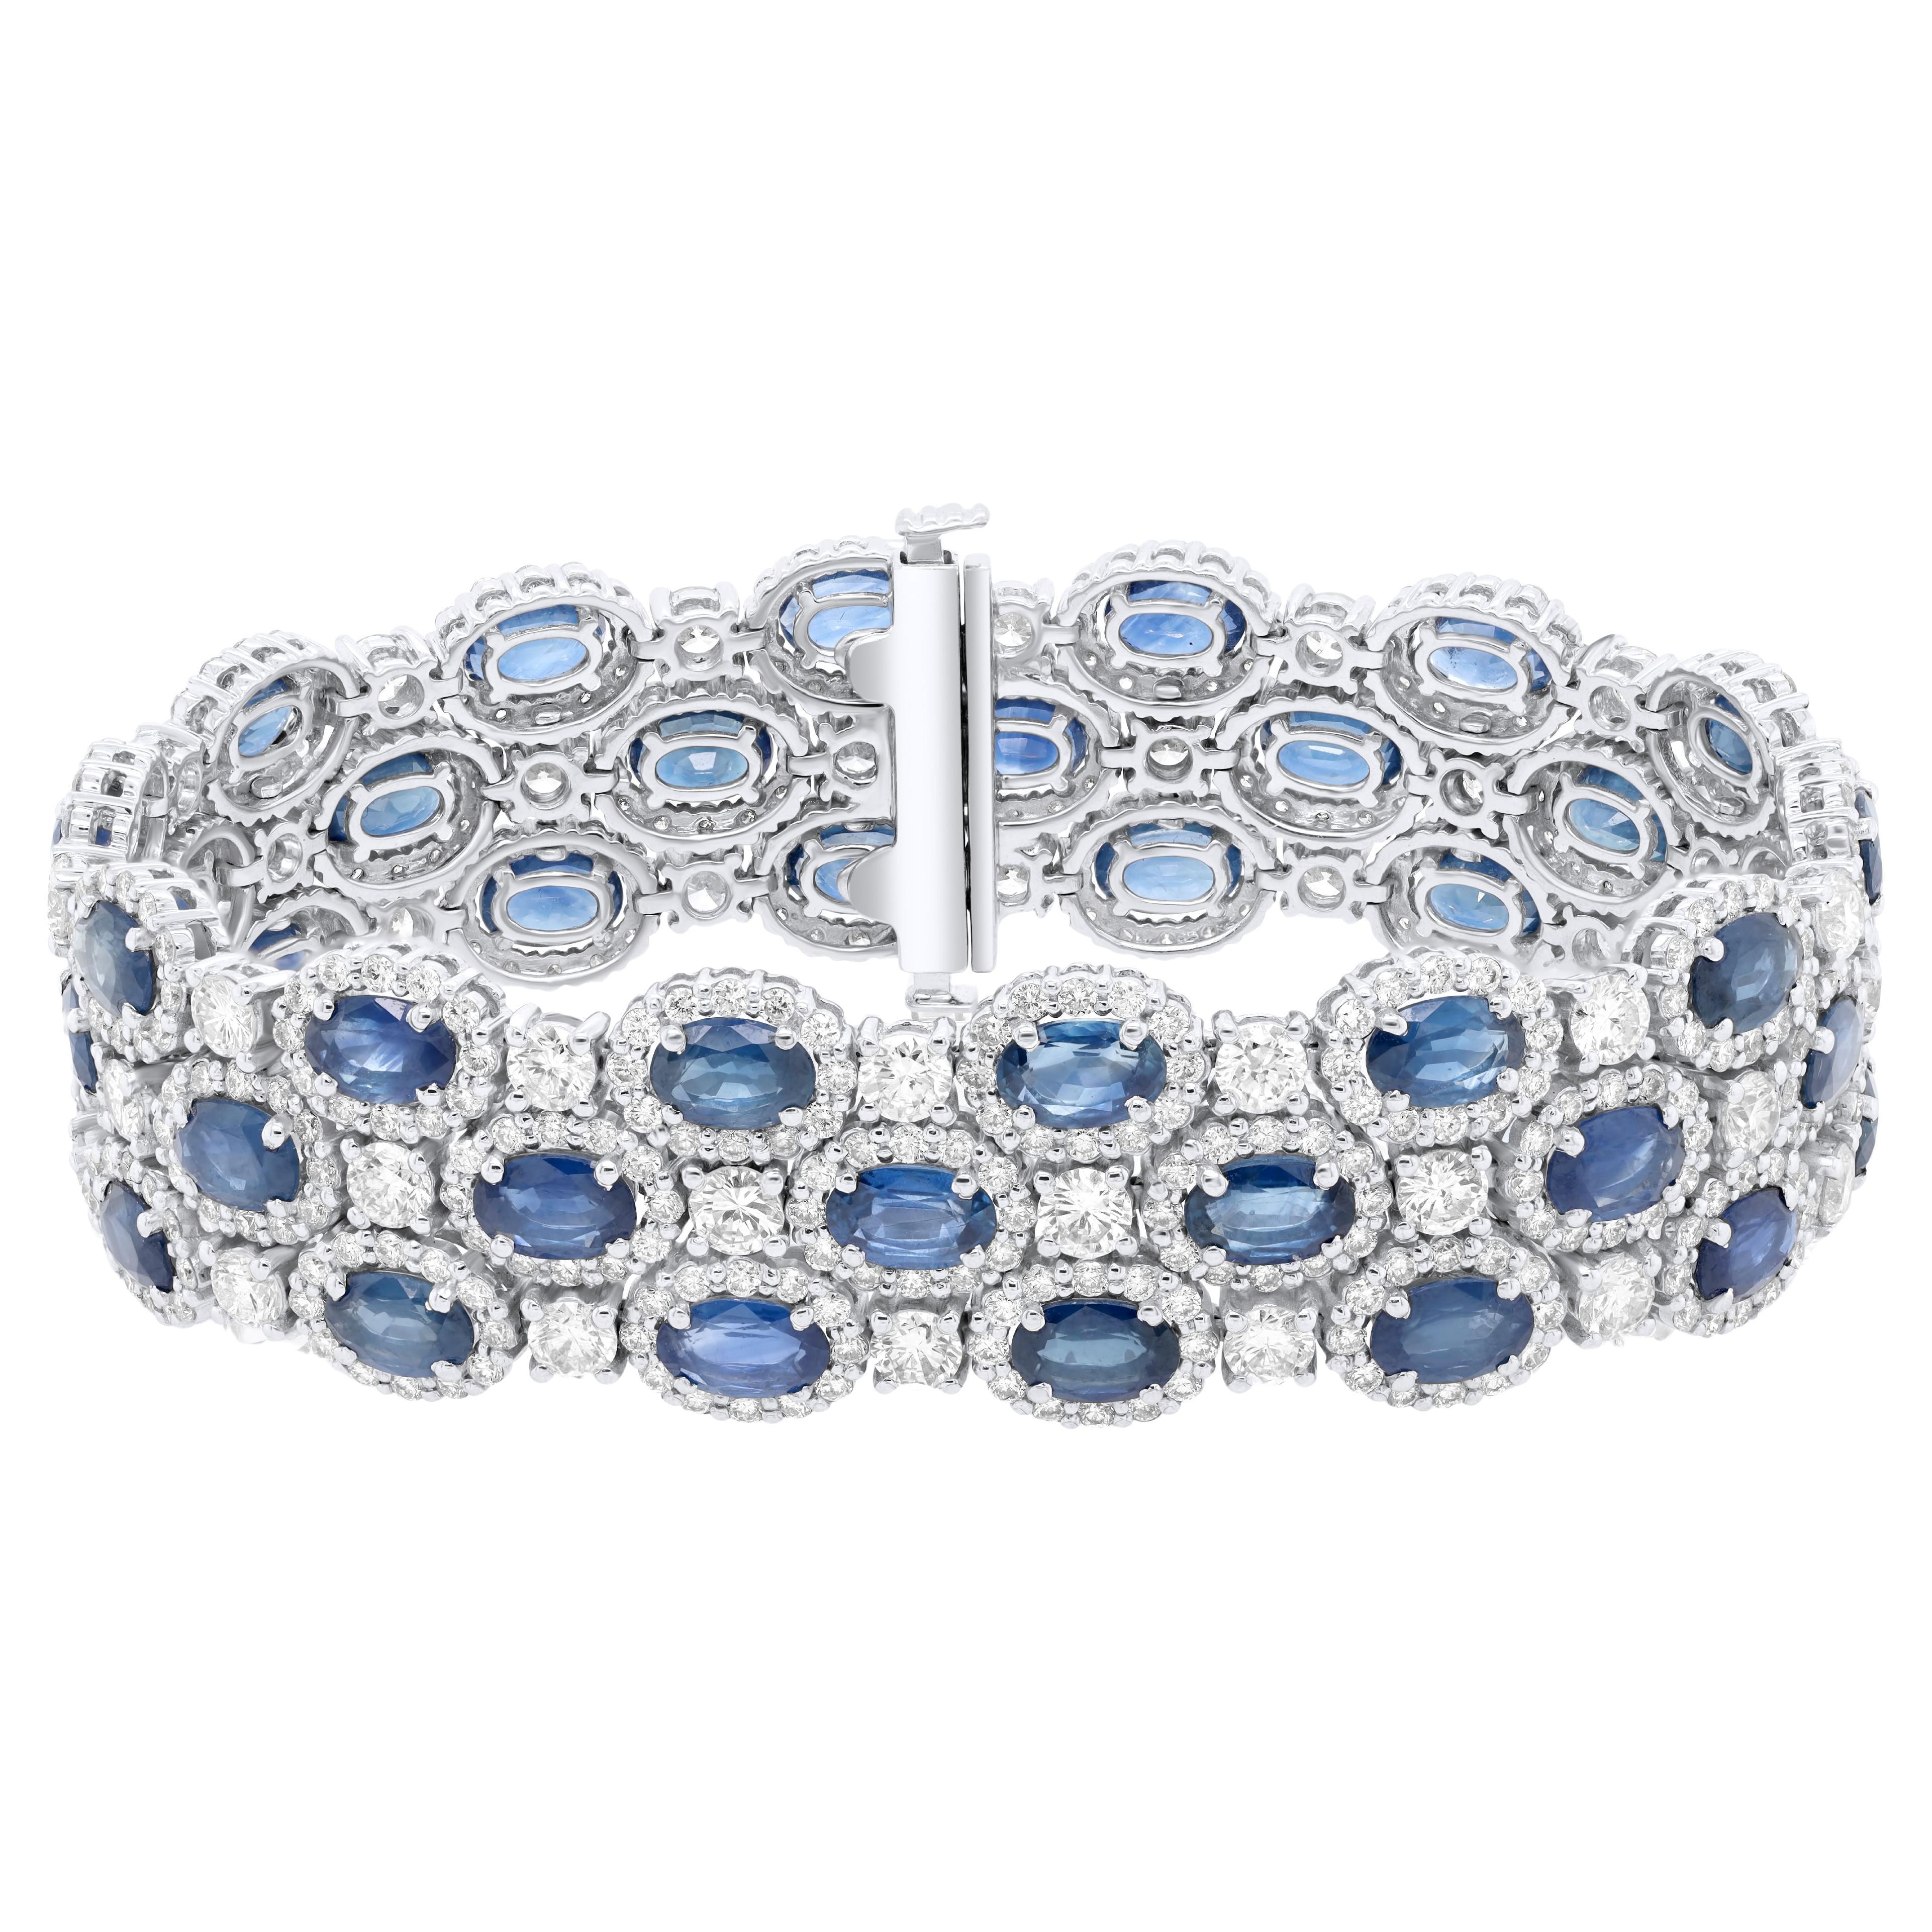 Diana M. 22.91 Carat Sapphire and 11.64 Carat Diamond Bracelet in White Gold